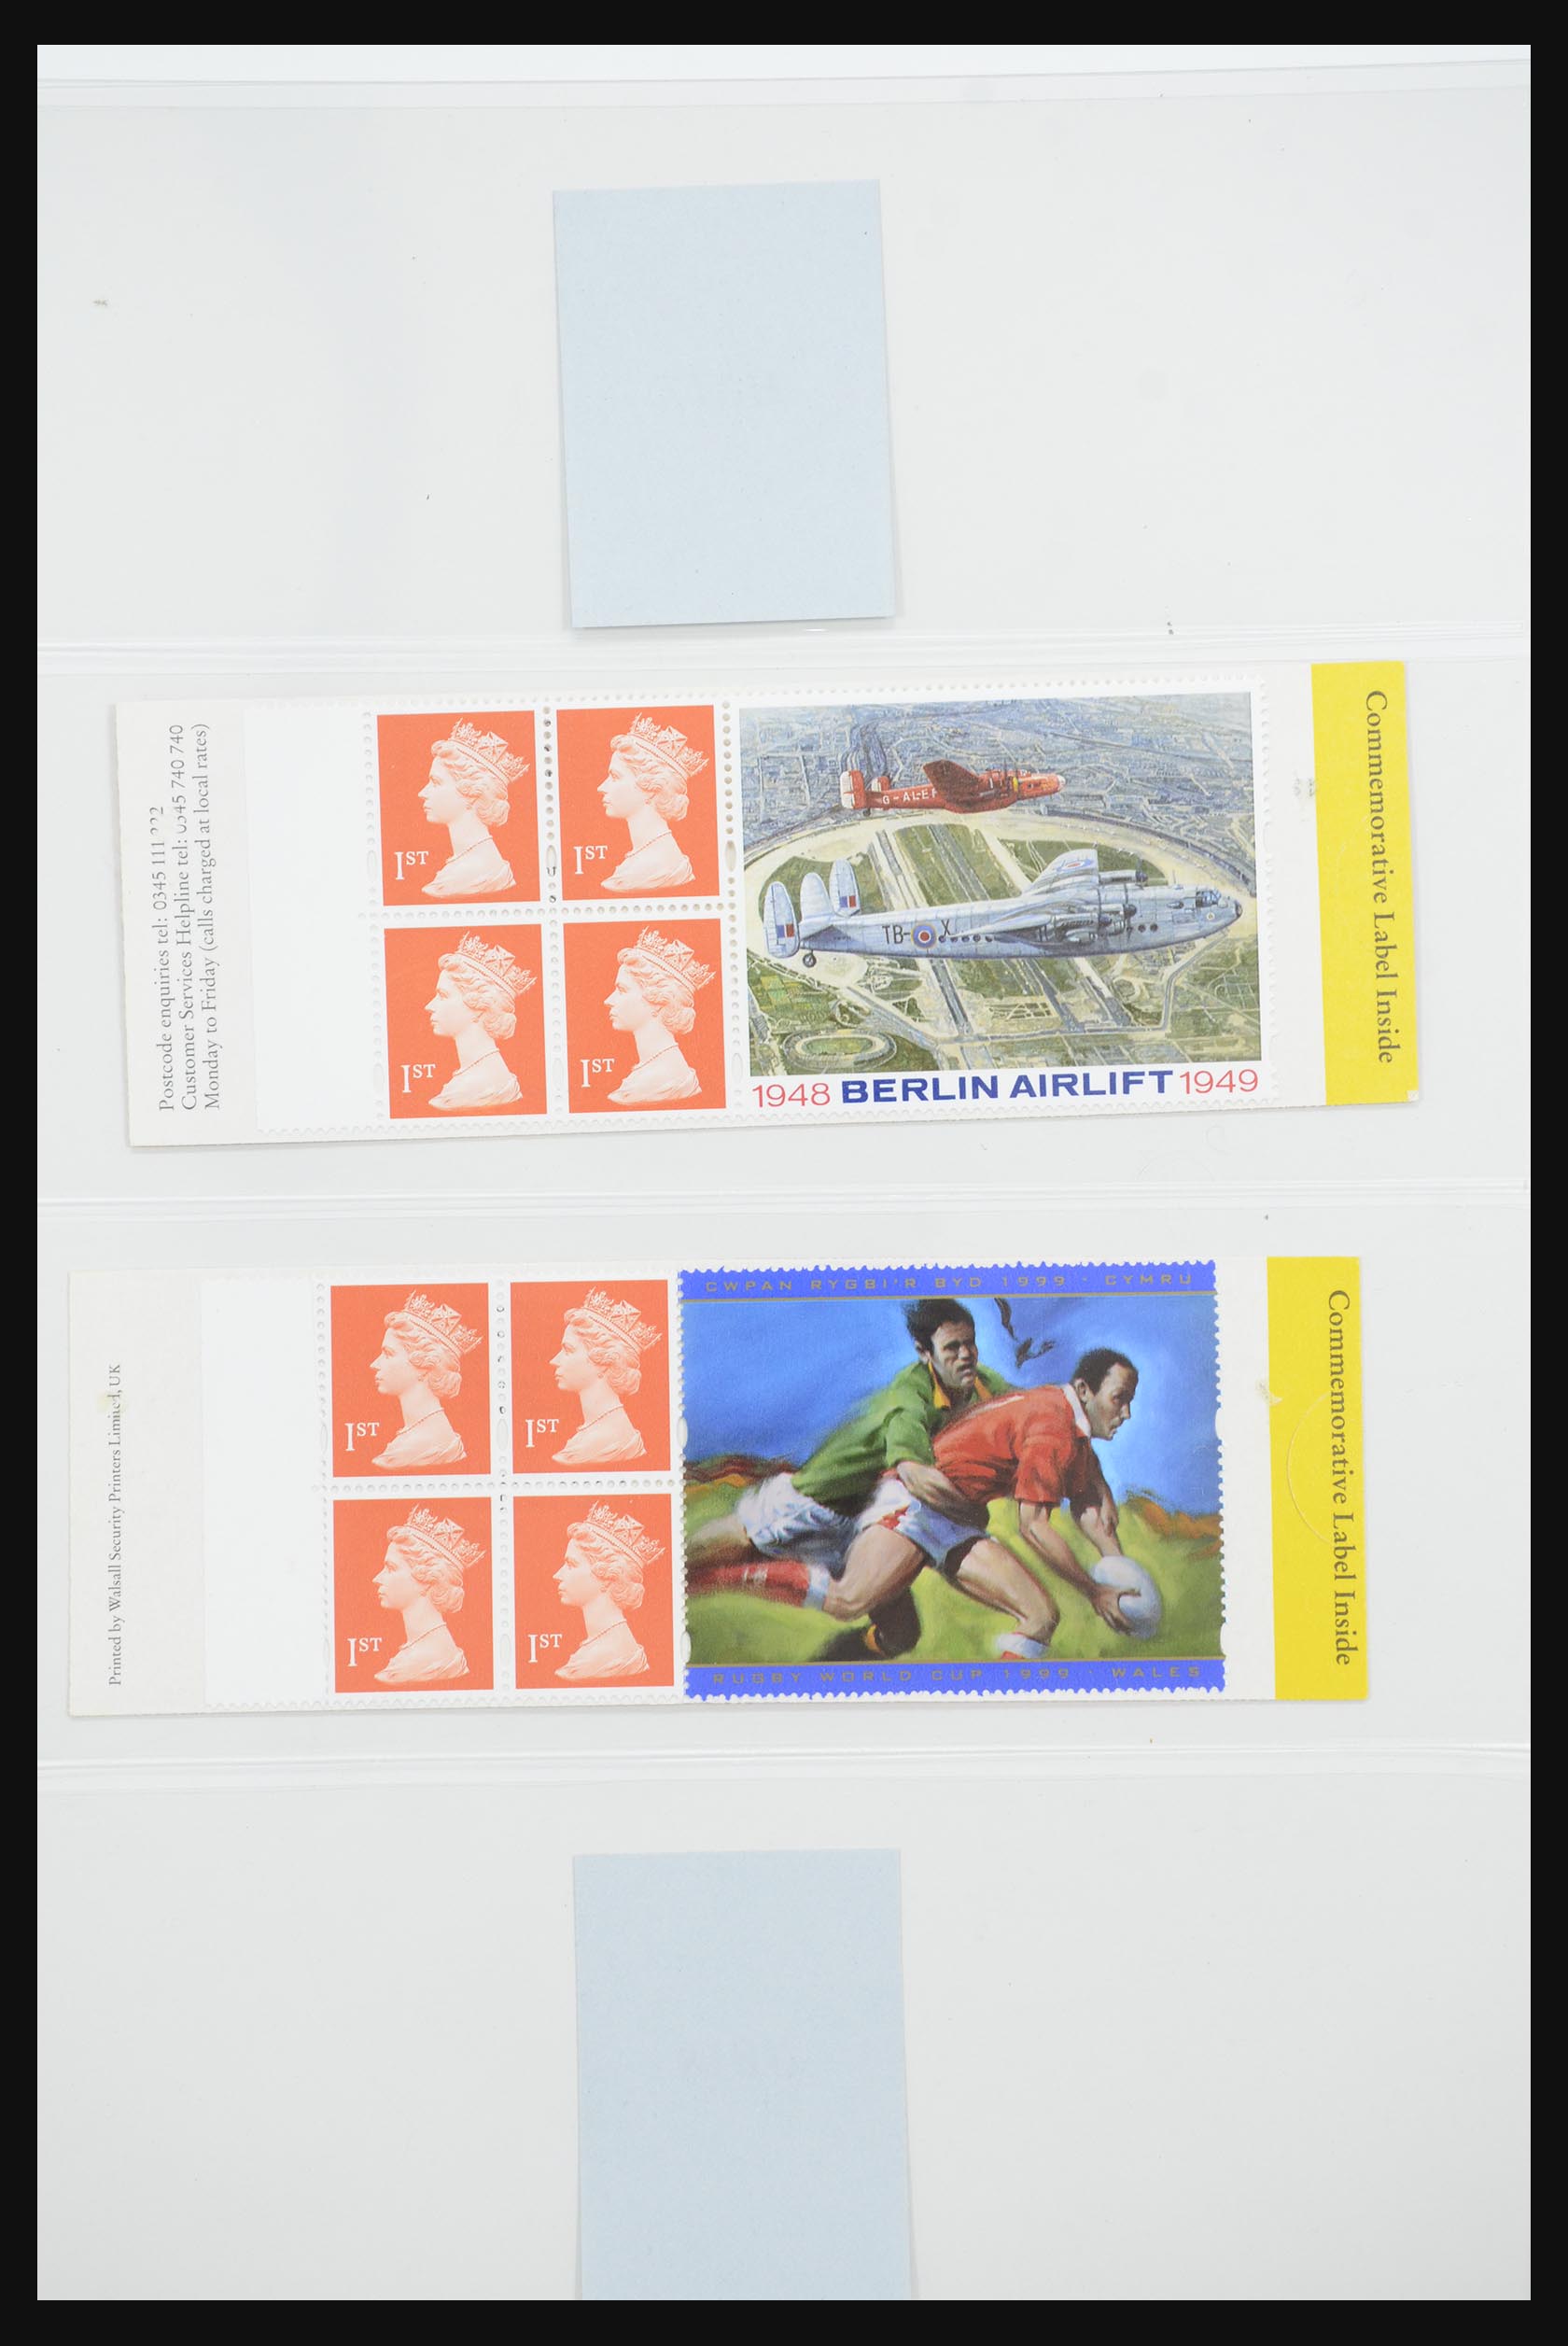 31960 050 - 31960 Great Britain stampbooklets 1989-2000.